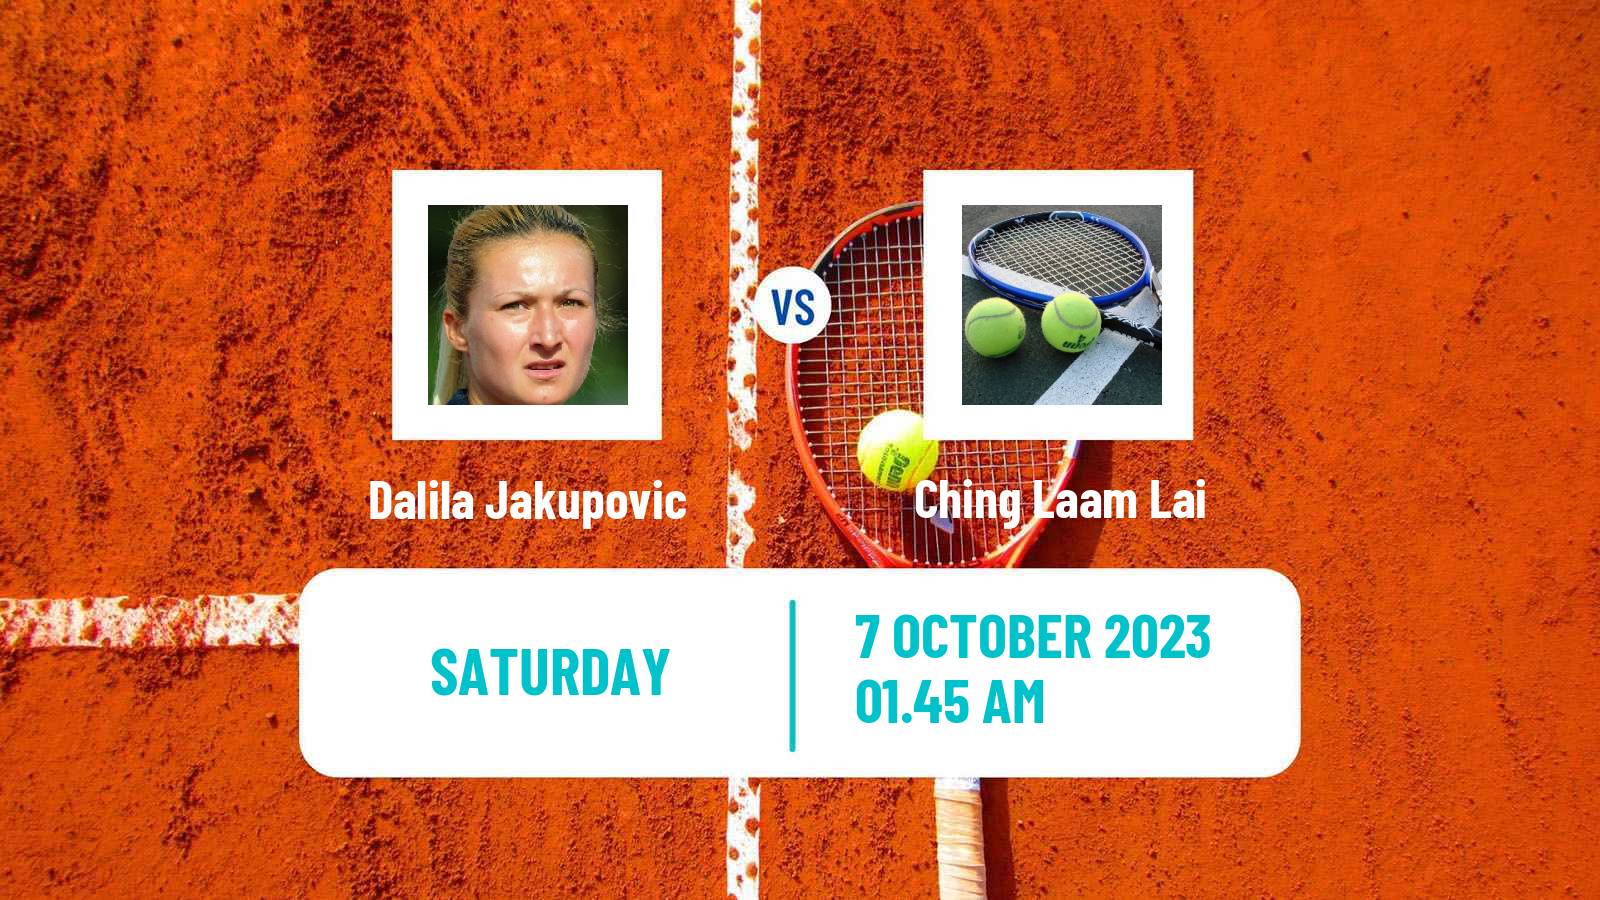 Tennis WTA Hong Kong Dalila Jakupovic - Ching Laam Lai